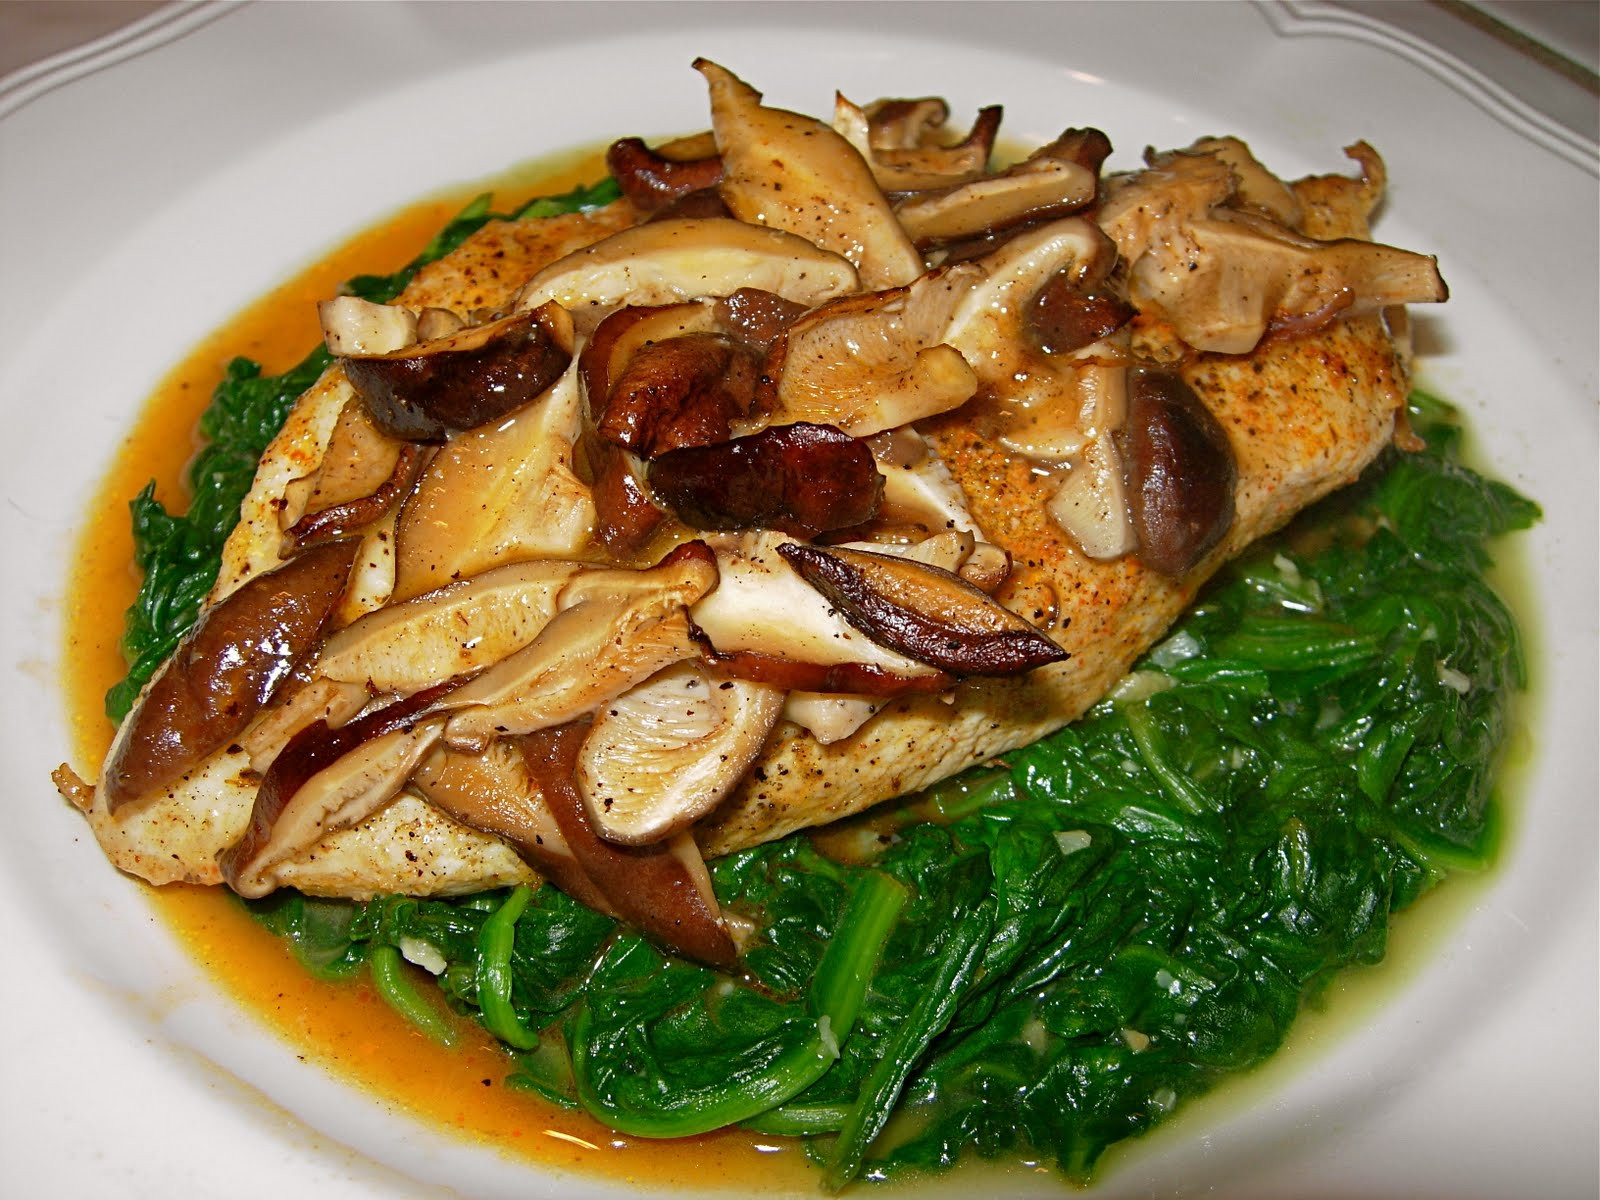 Shiitake Mushrooms Recipes
 CFSCC presents EAT THIS Shiitake Mushroom Baked Chicken